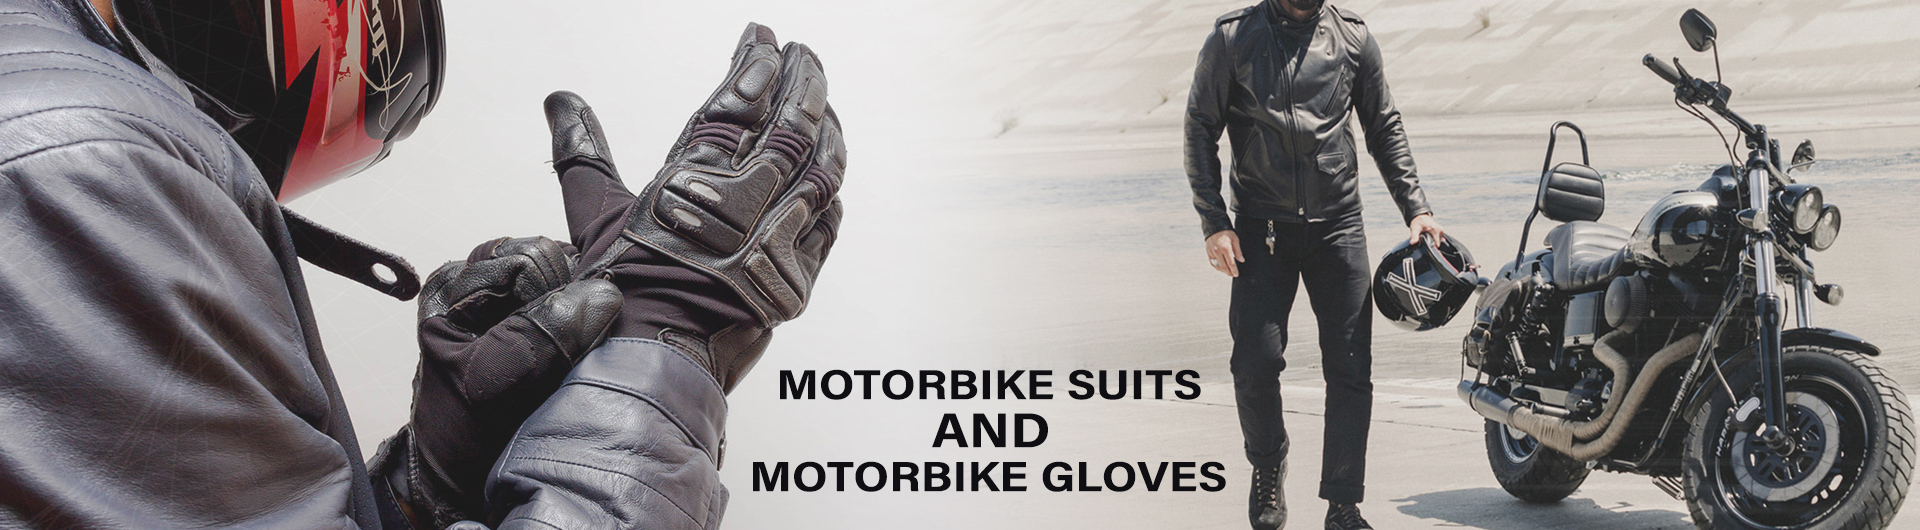 Motorbike Suits & Gloves Banner